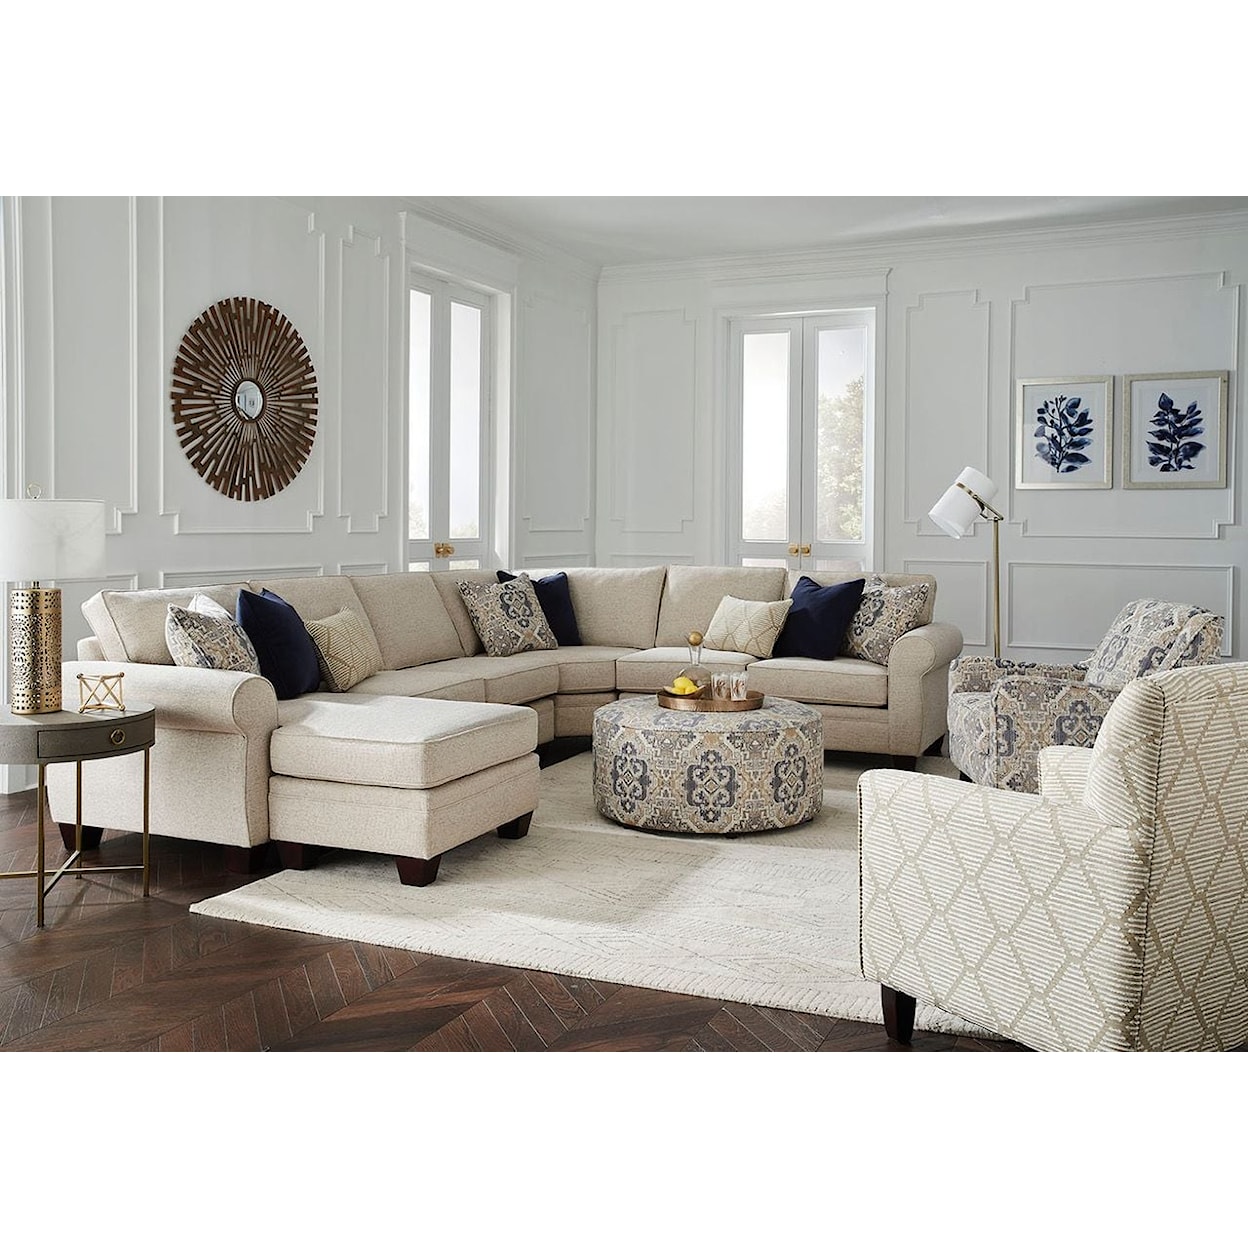 Fusion Furniture 1170 PLUMLEY BISQUE Living Room Set